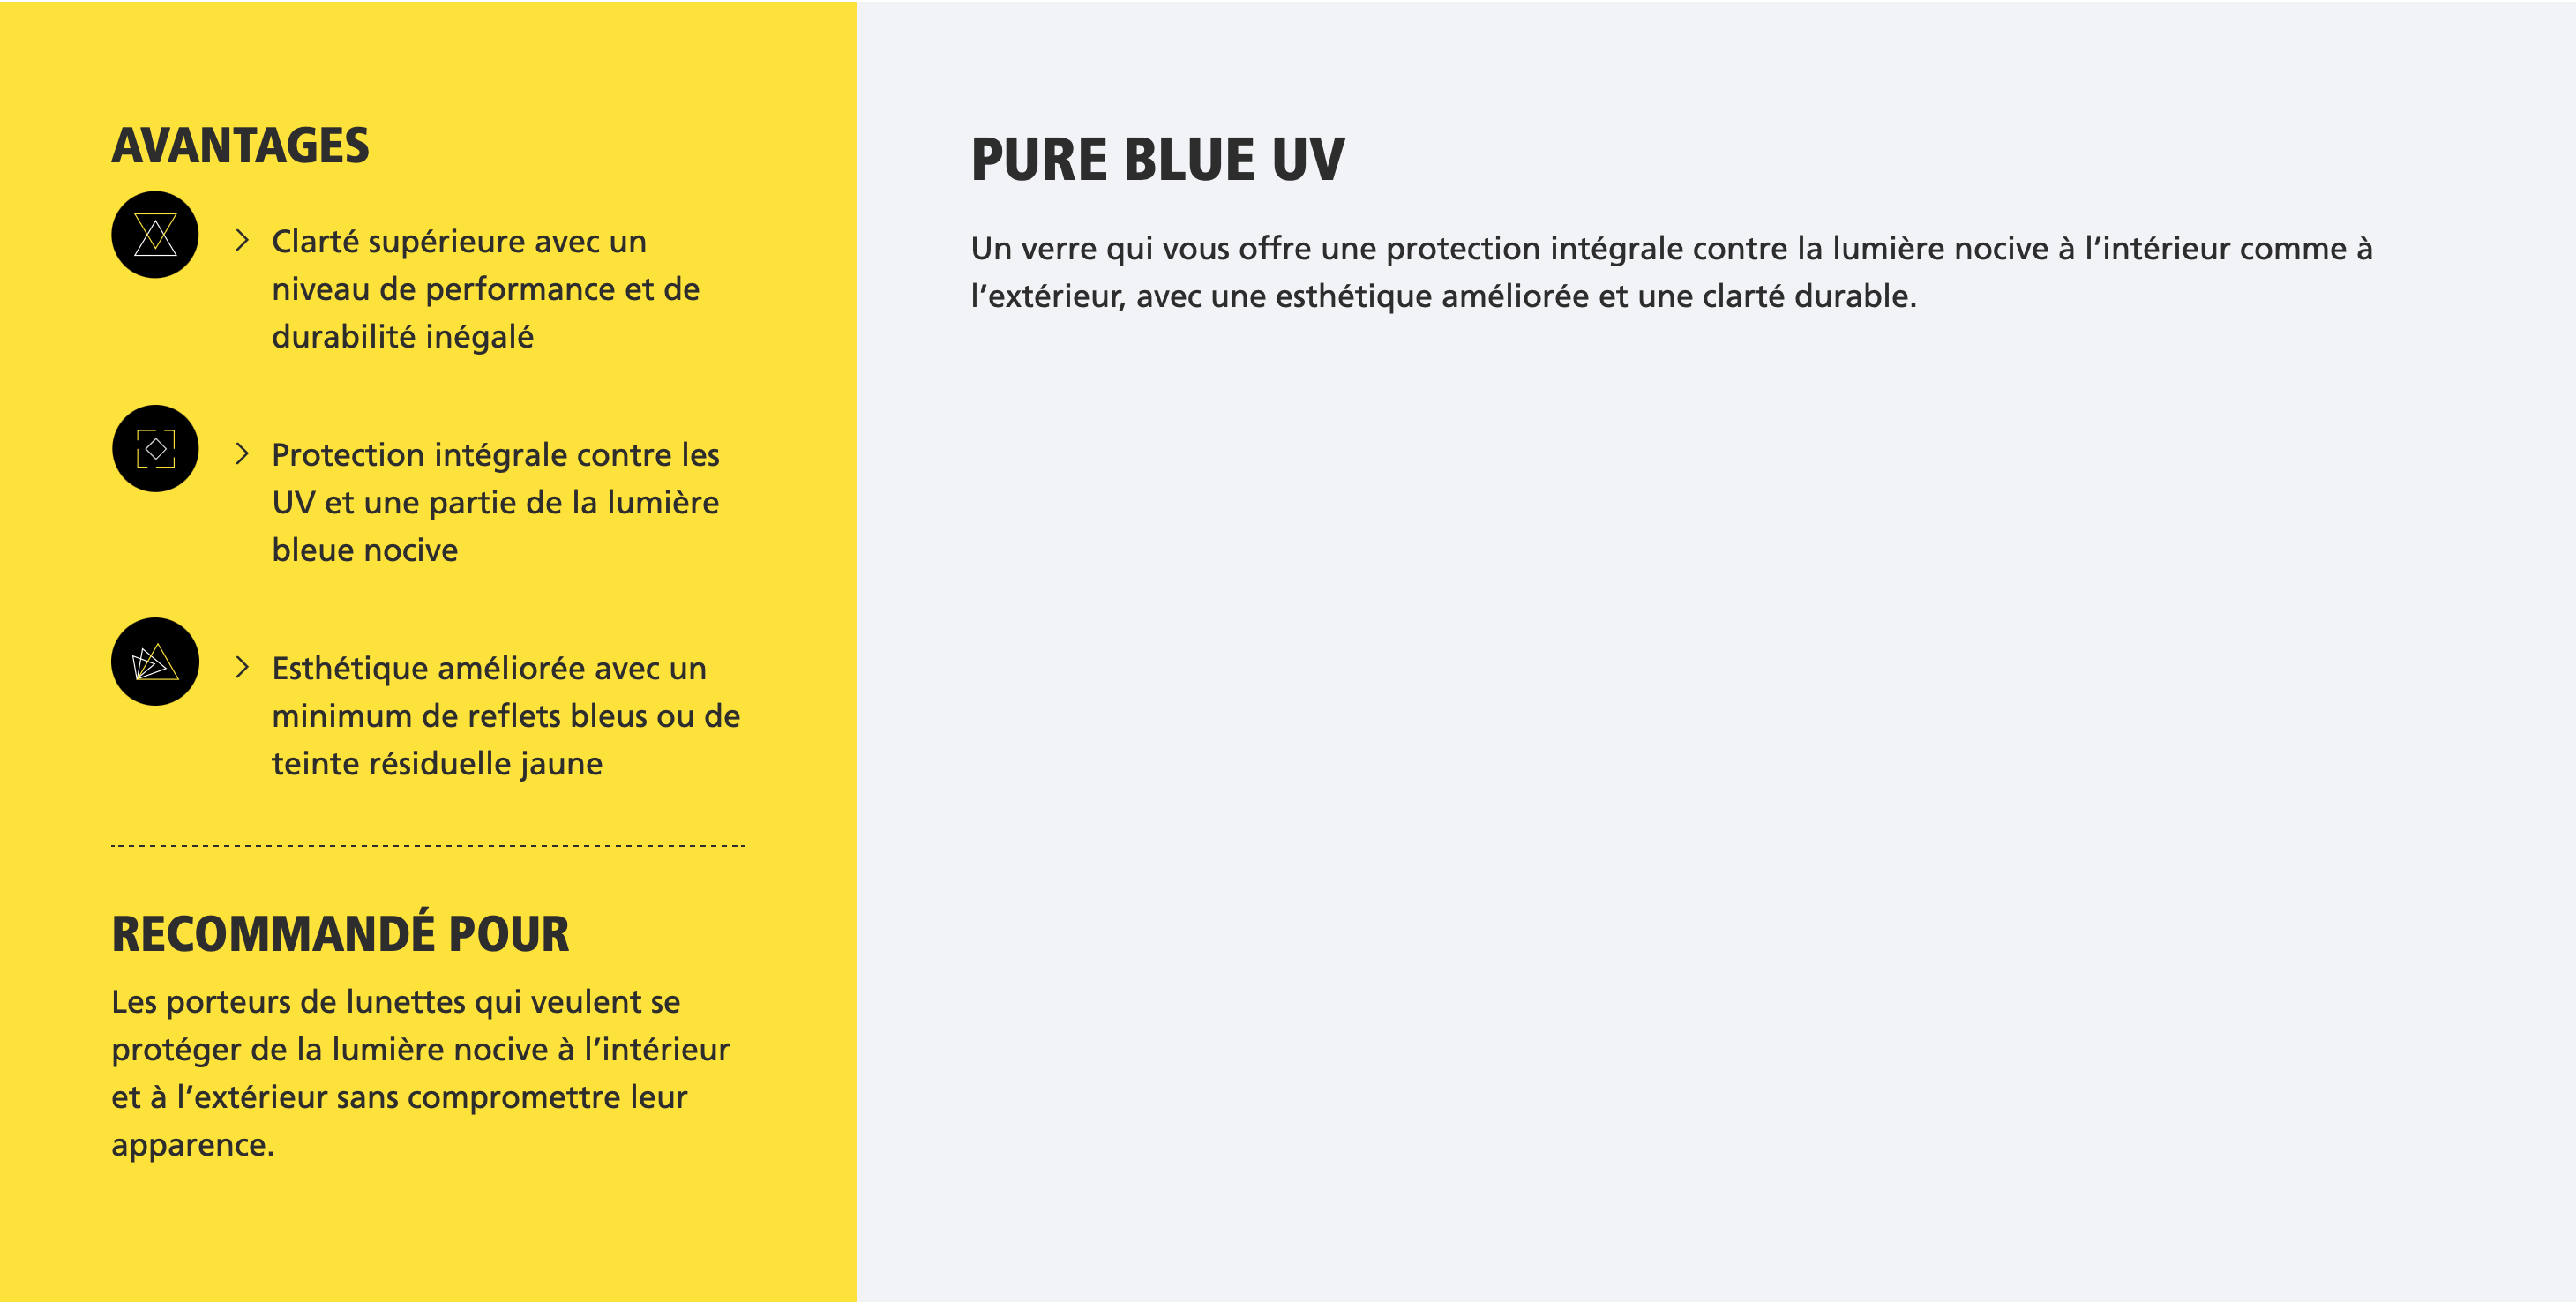 Nikon - Pure Blue UV